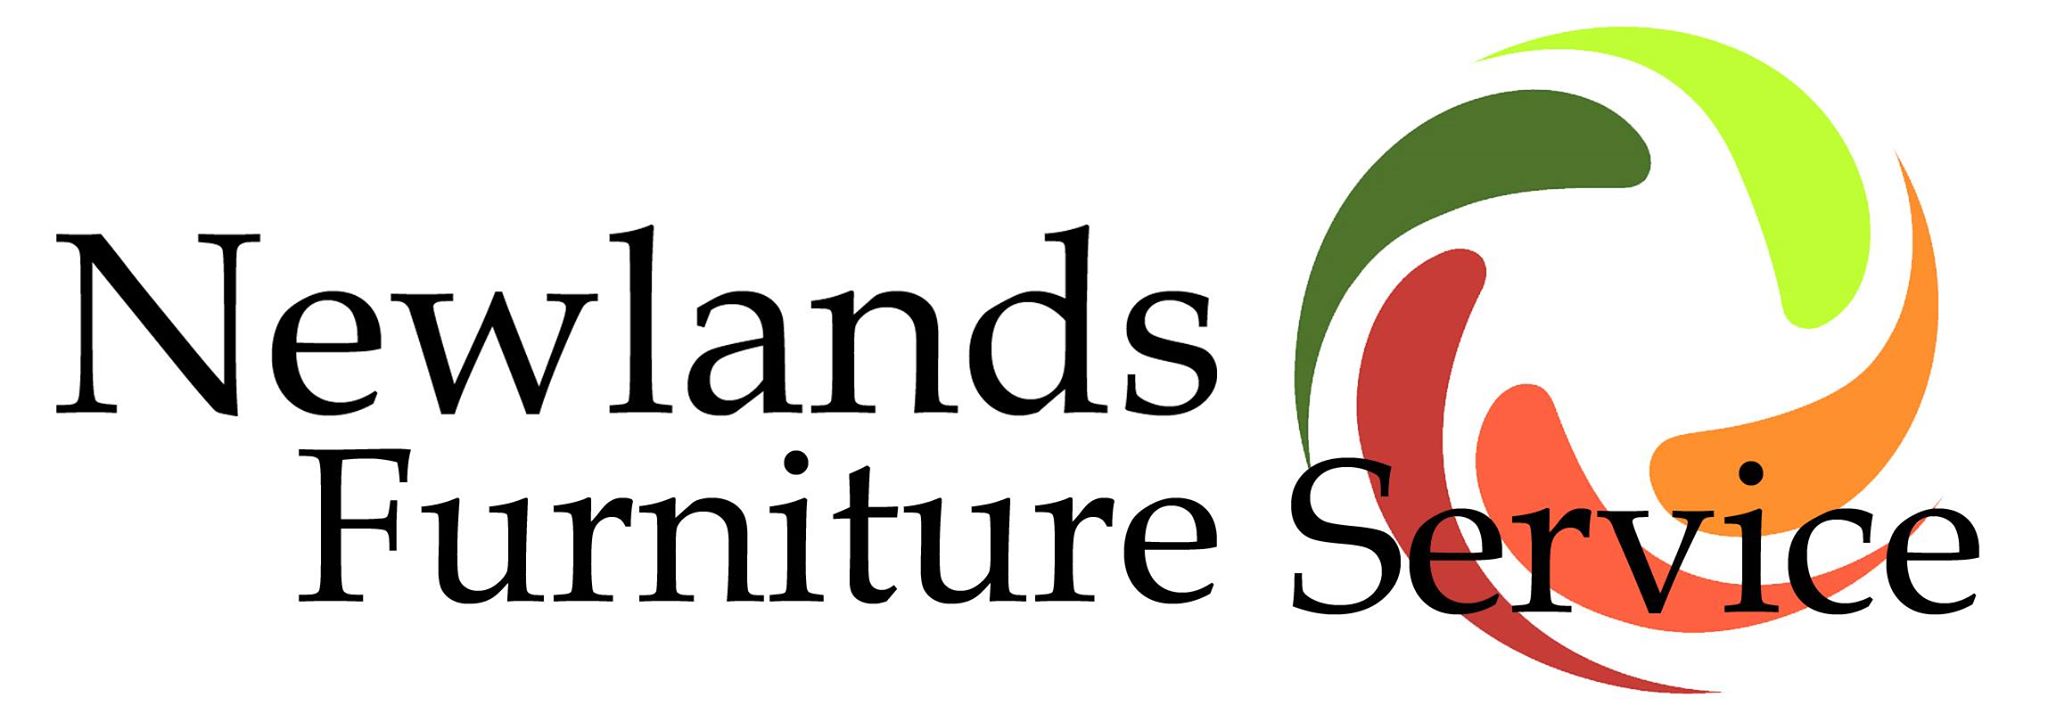 Newlands Furniture Service